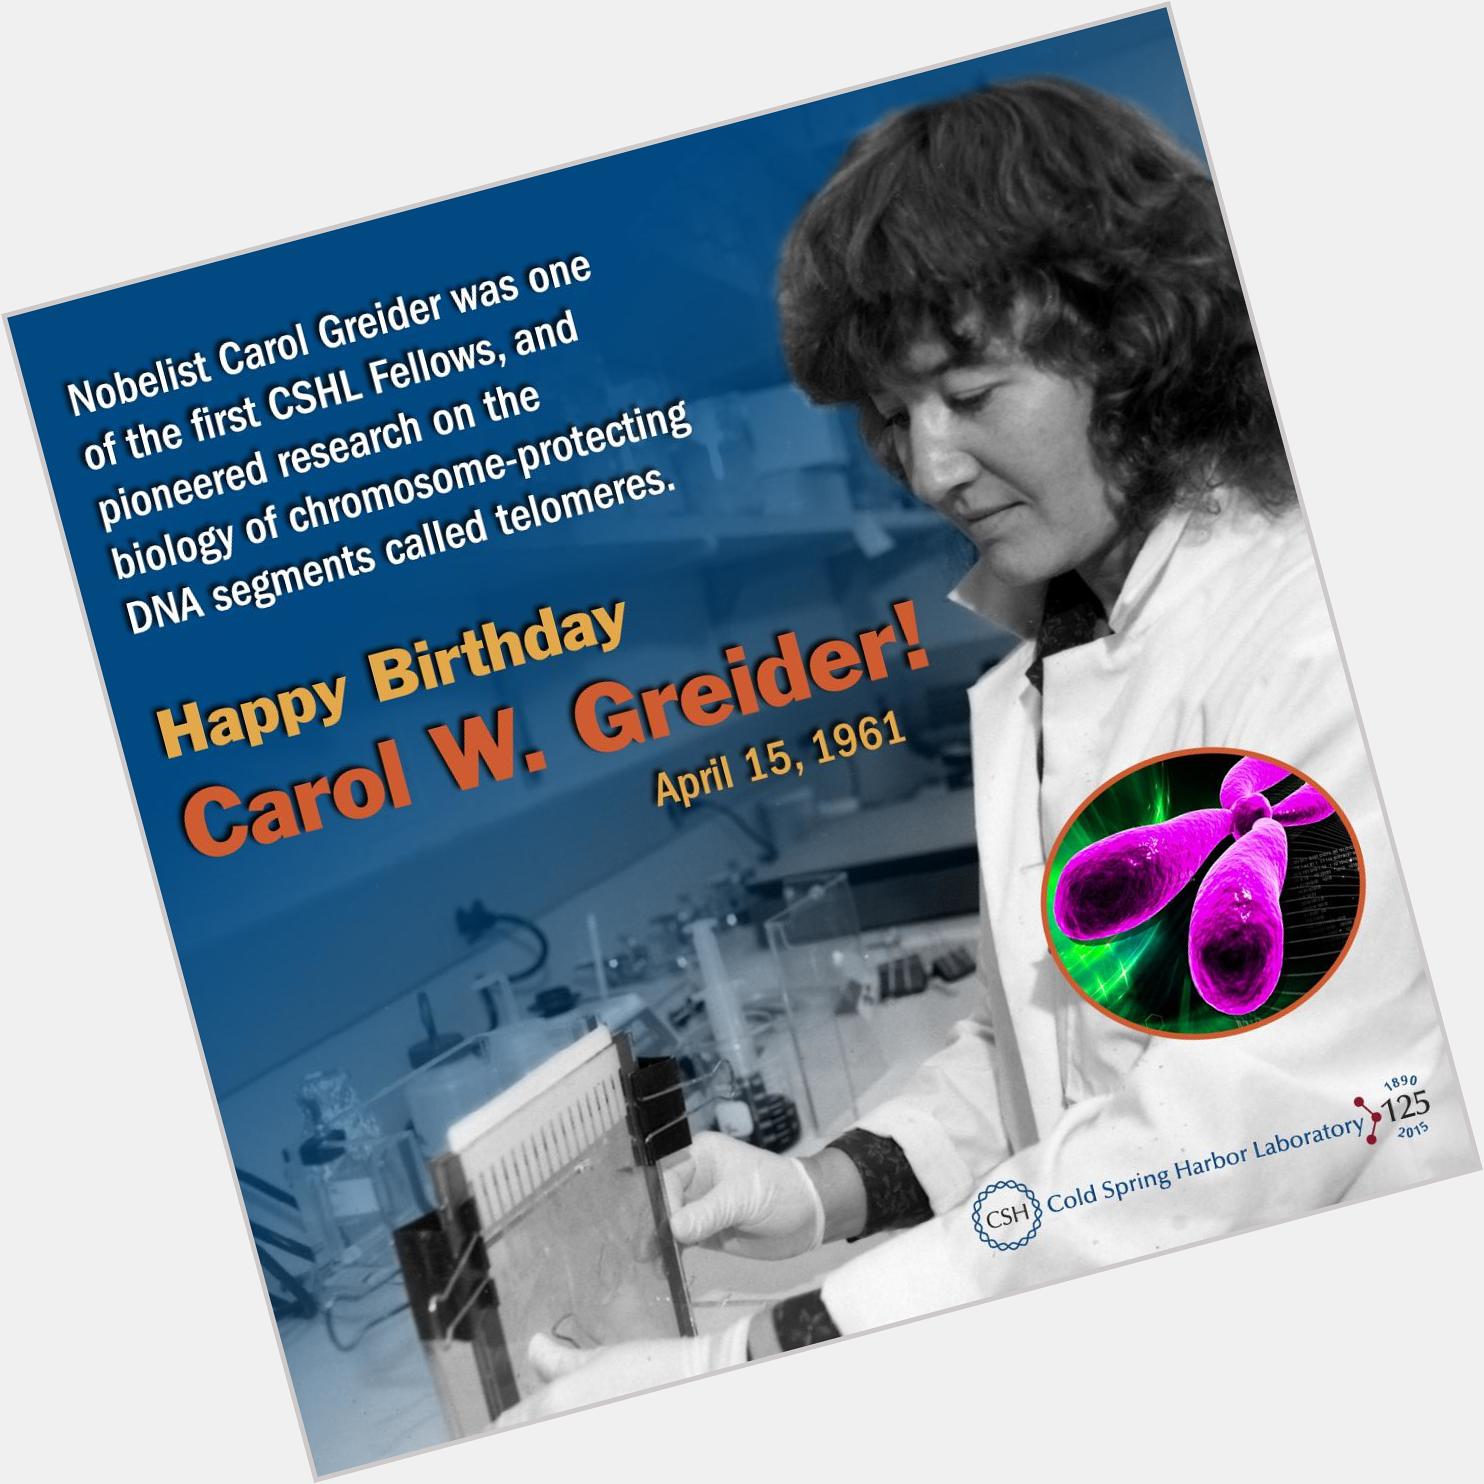 Happy birthday Nobelist Carol Greider-she pioneered work on chromosome-protecting segments:  